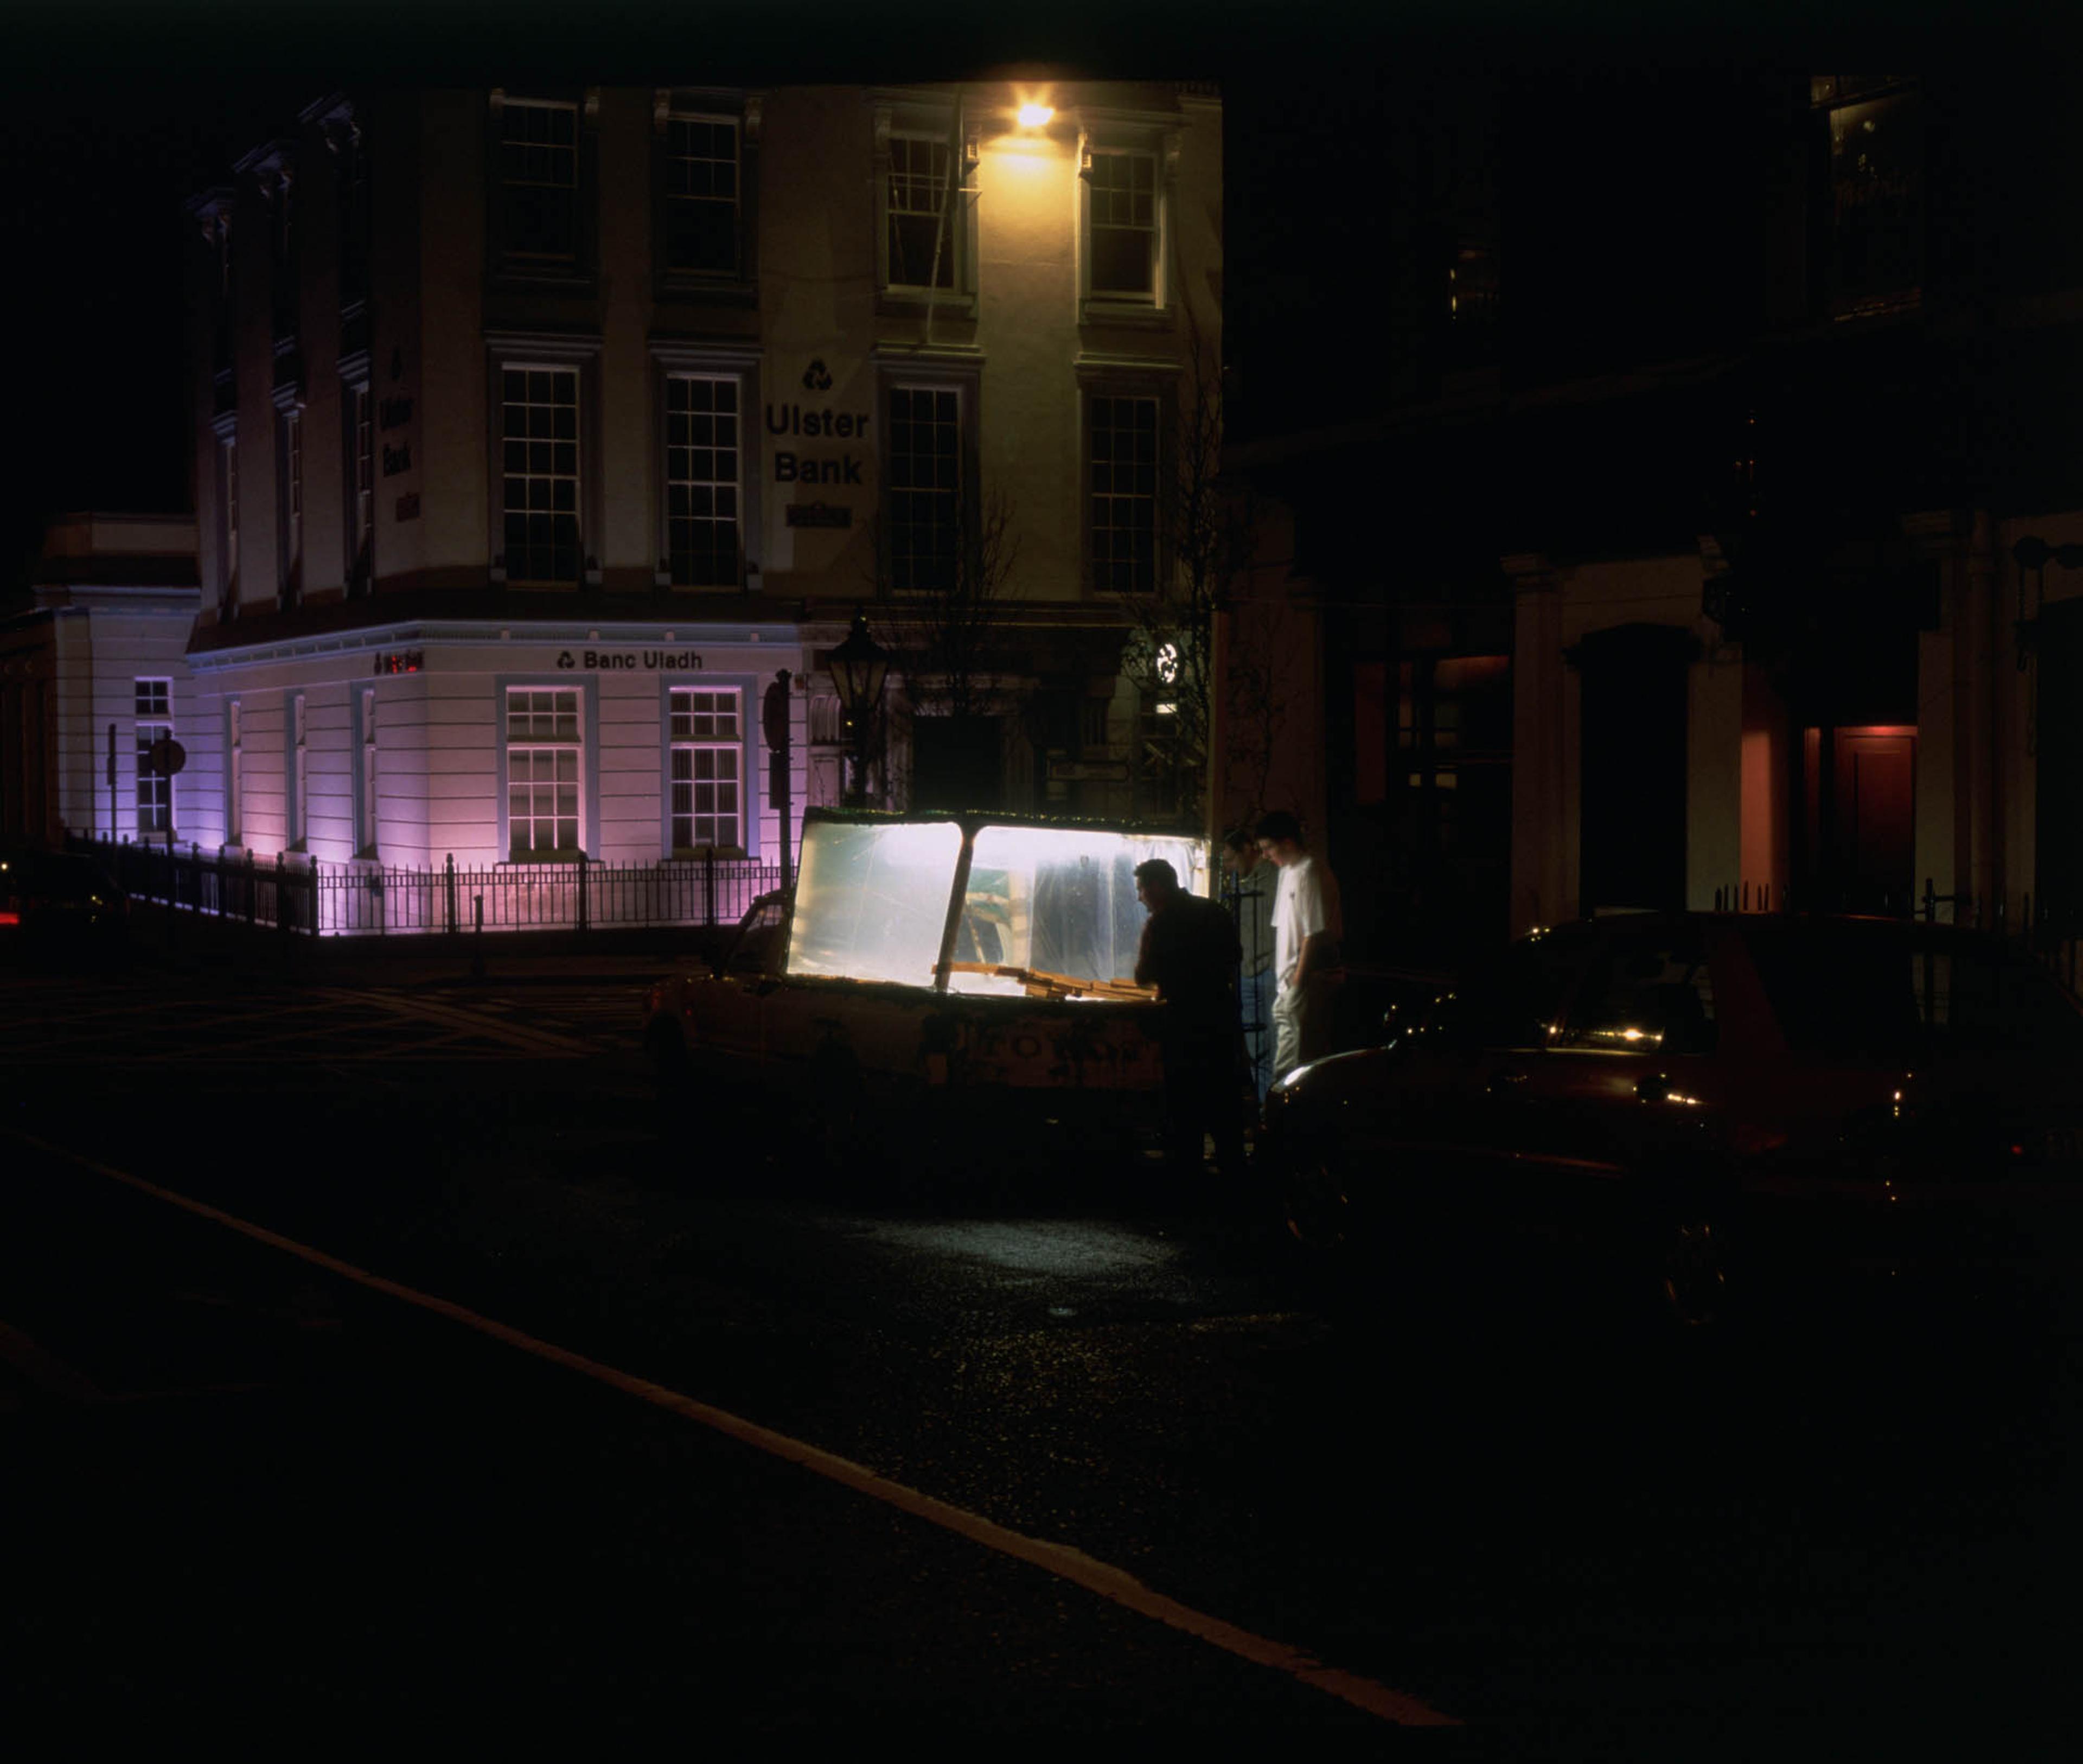 (1996) Thomas Hirschhorn, Pub Car, 1996, mixed media installation.